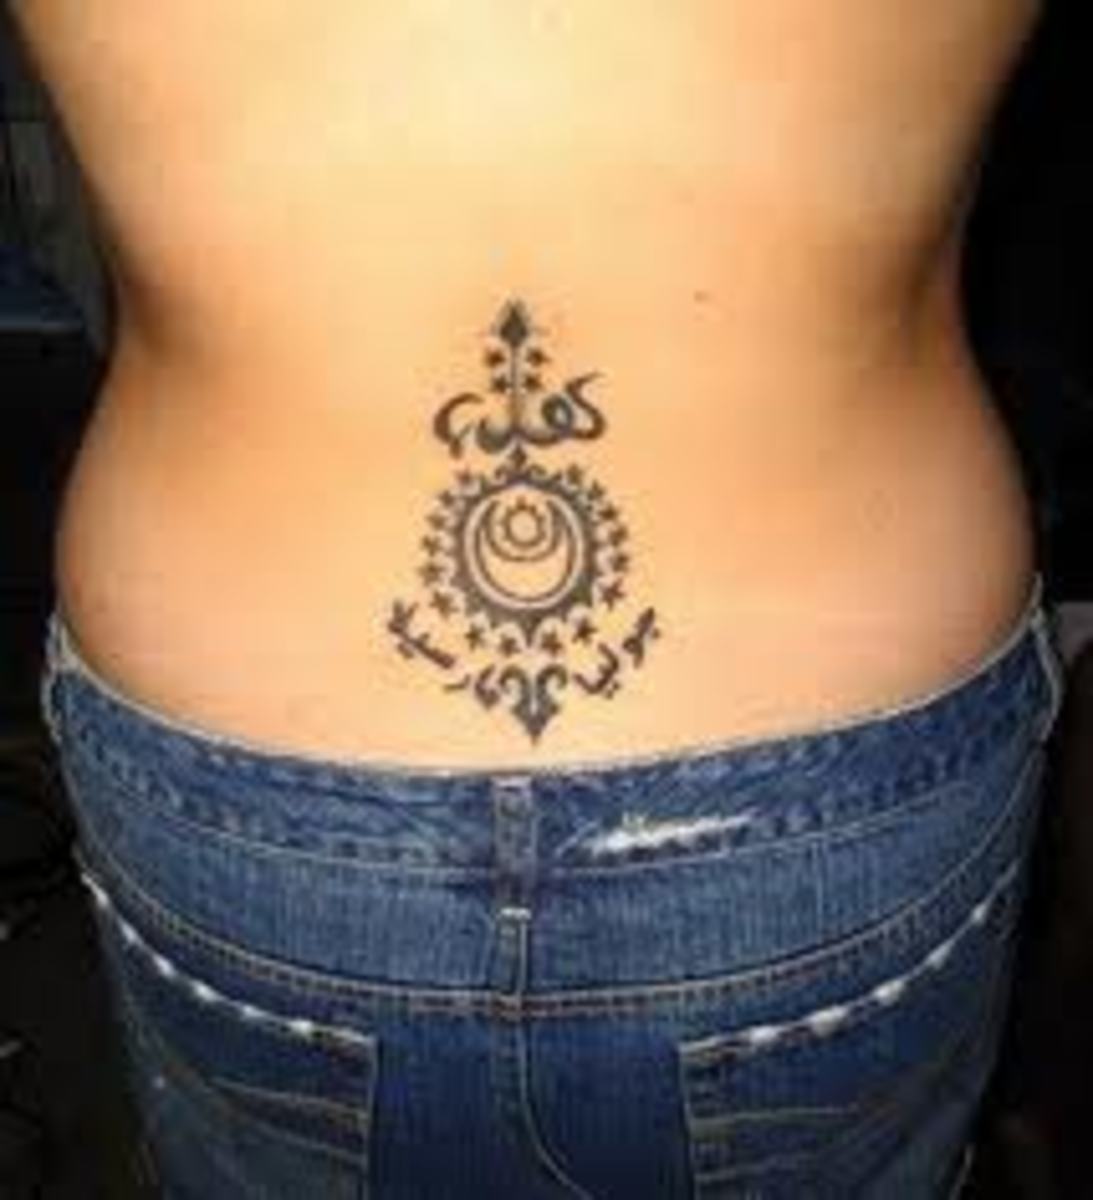 A creative lower back tattoo design